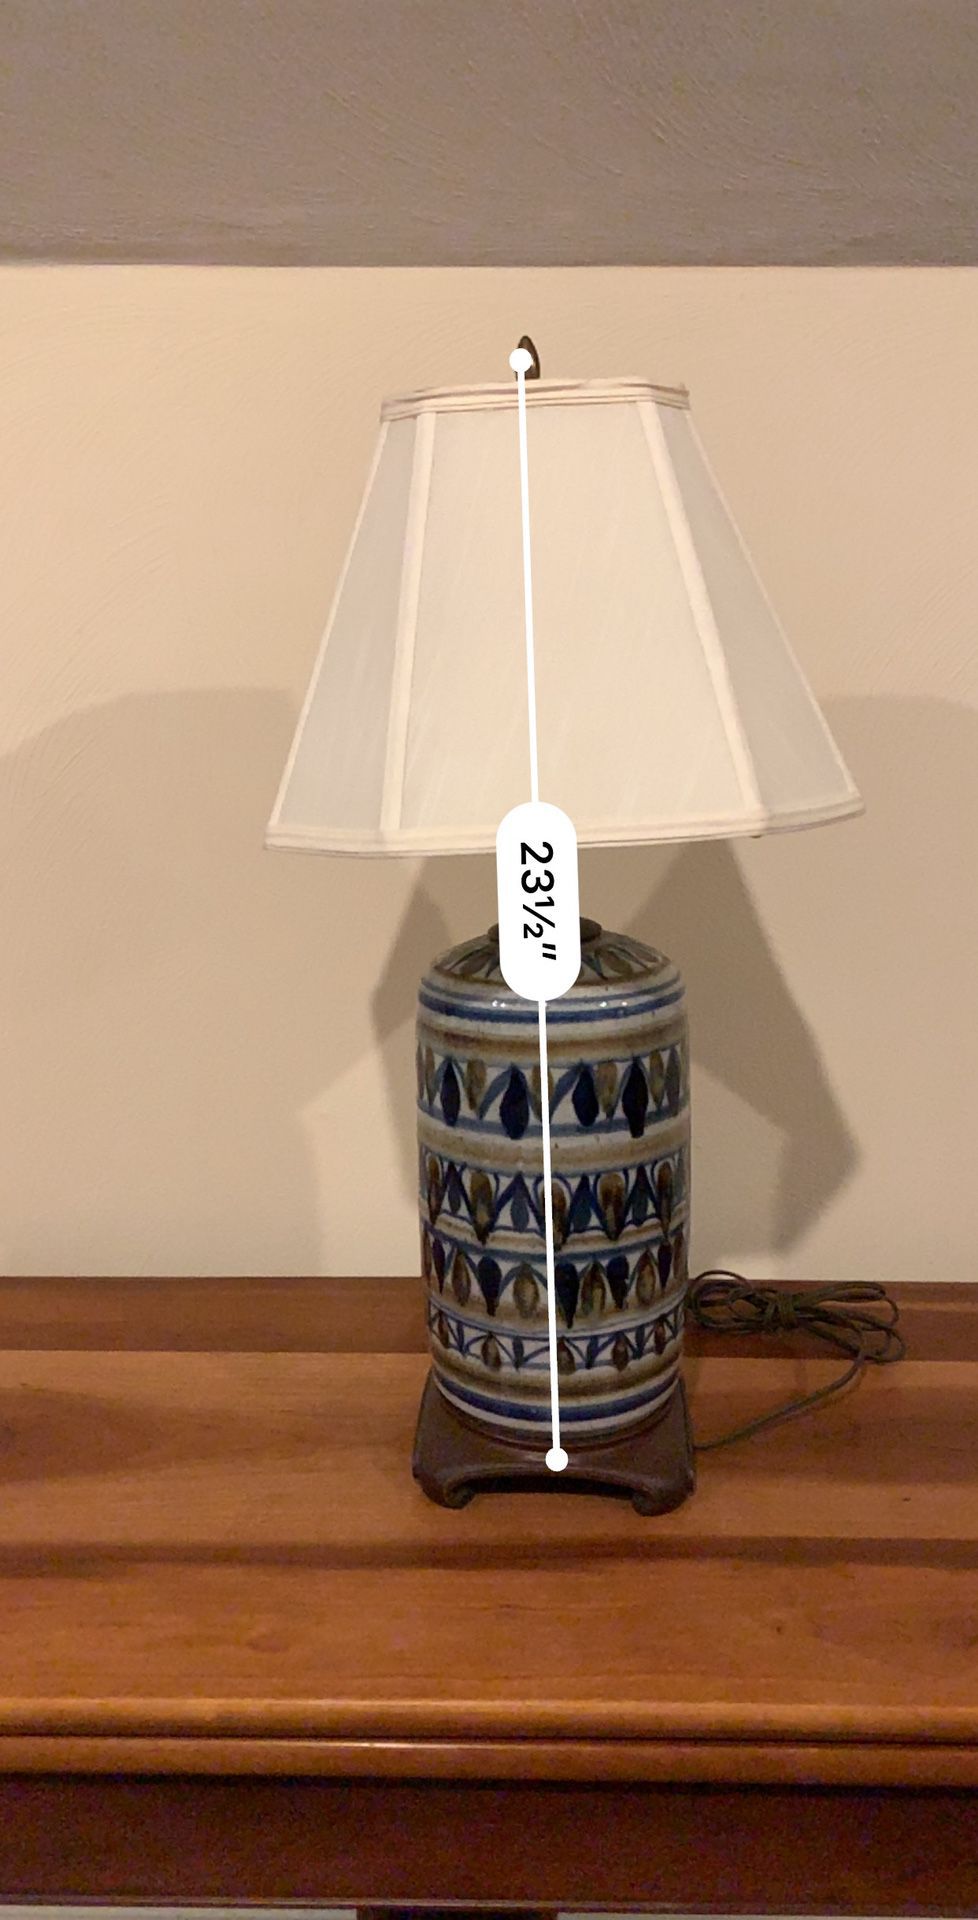 Frank Loyd Wright inspired ceramic lamp